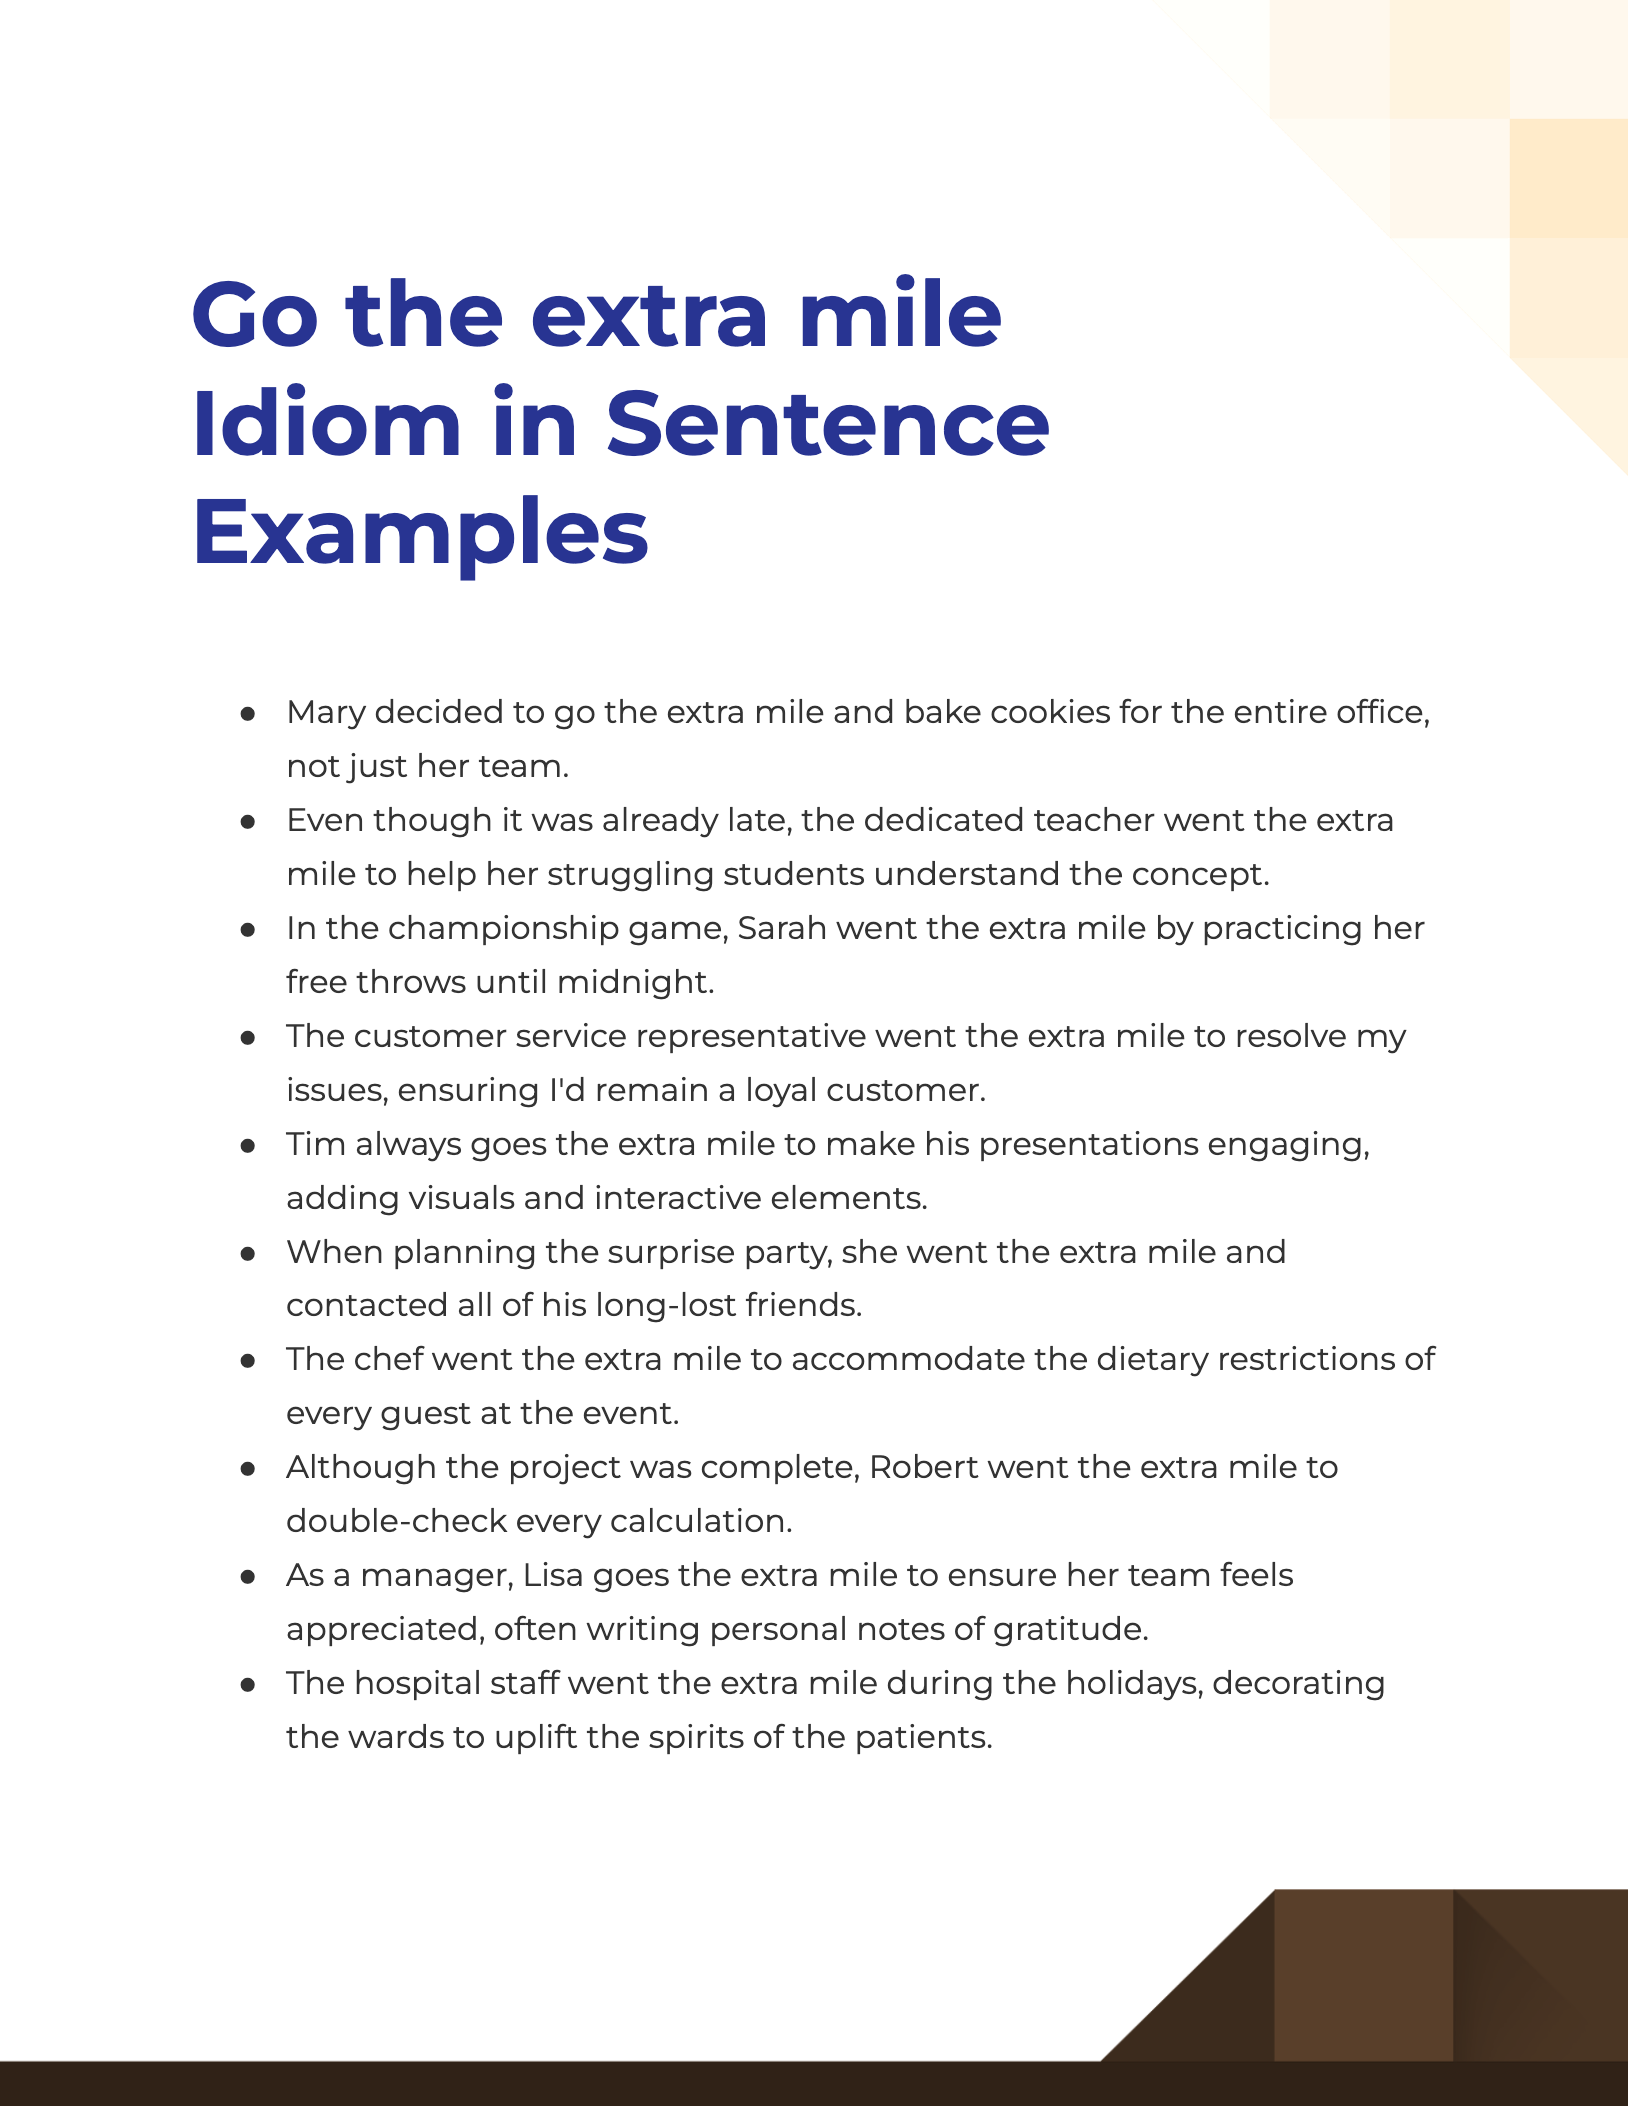 go the extra mile idiom1